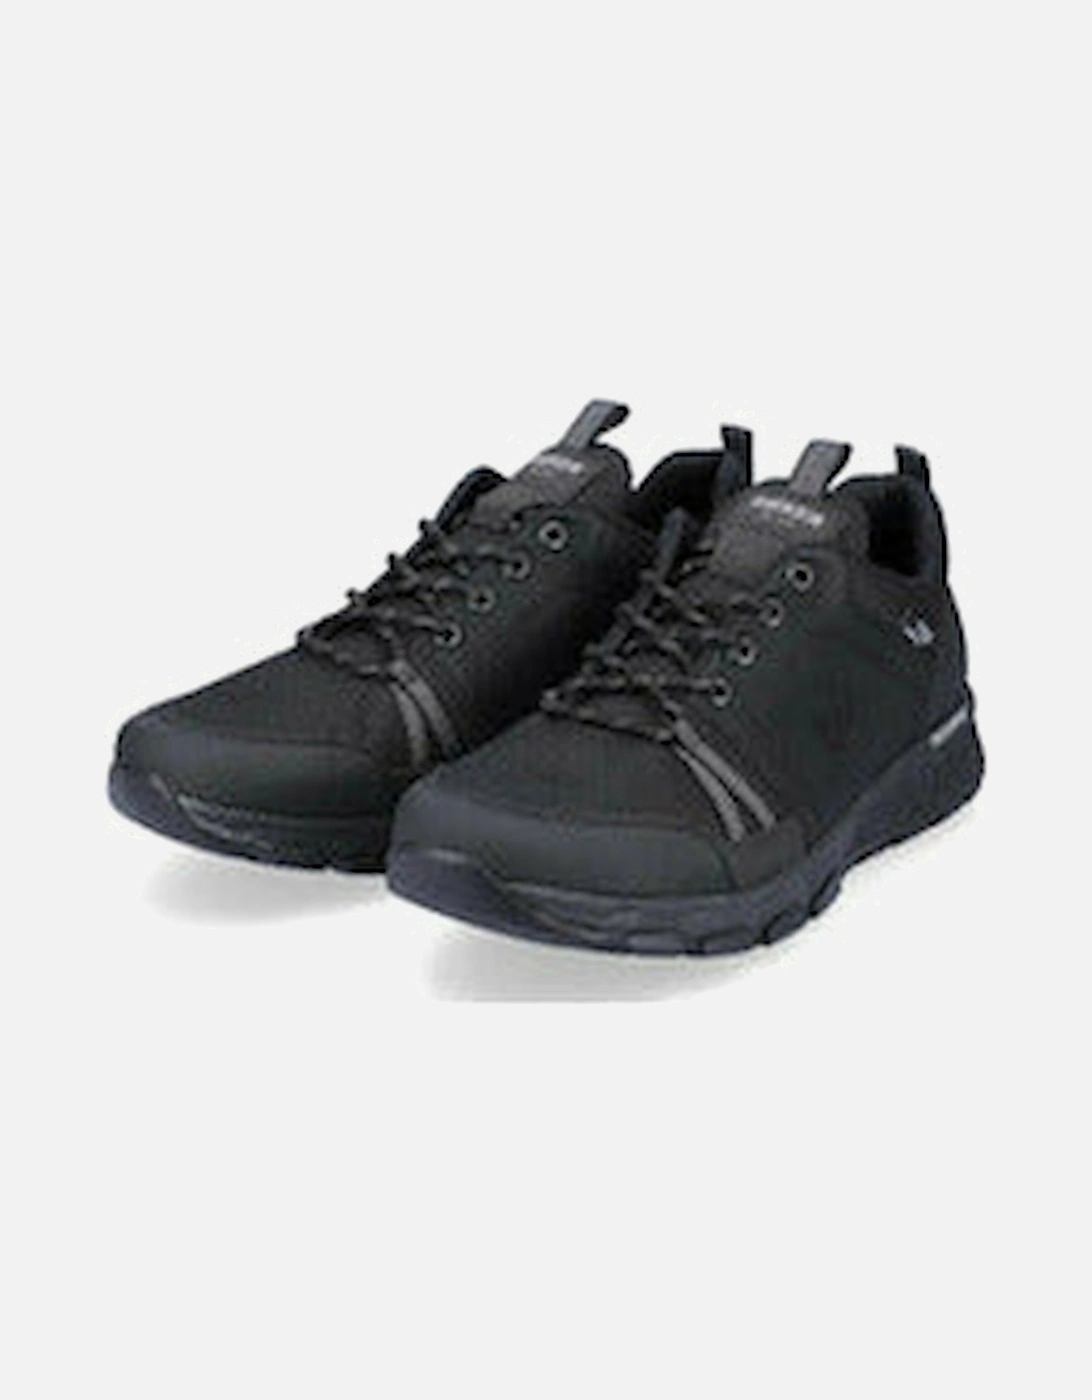 Mens Walking Shoe B6702 black